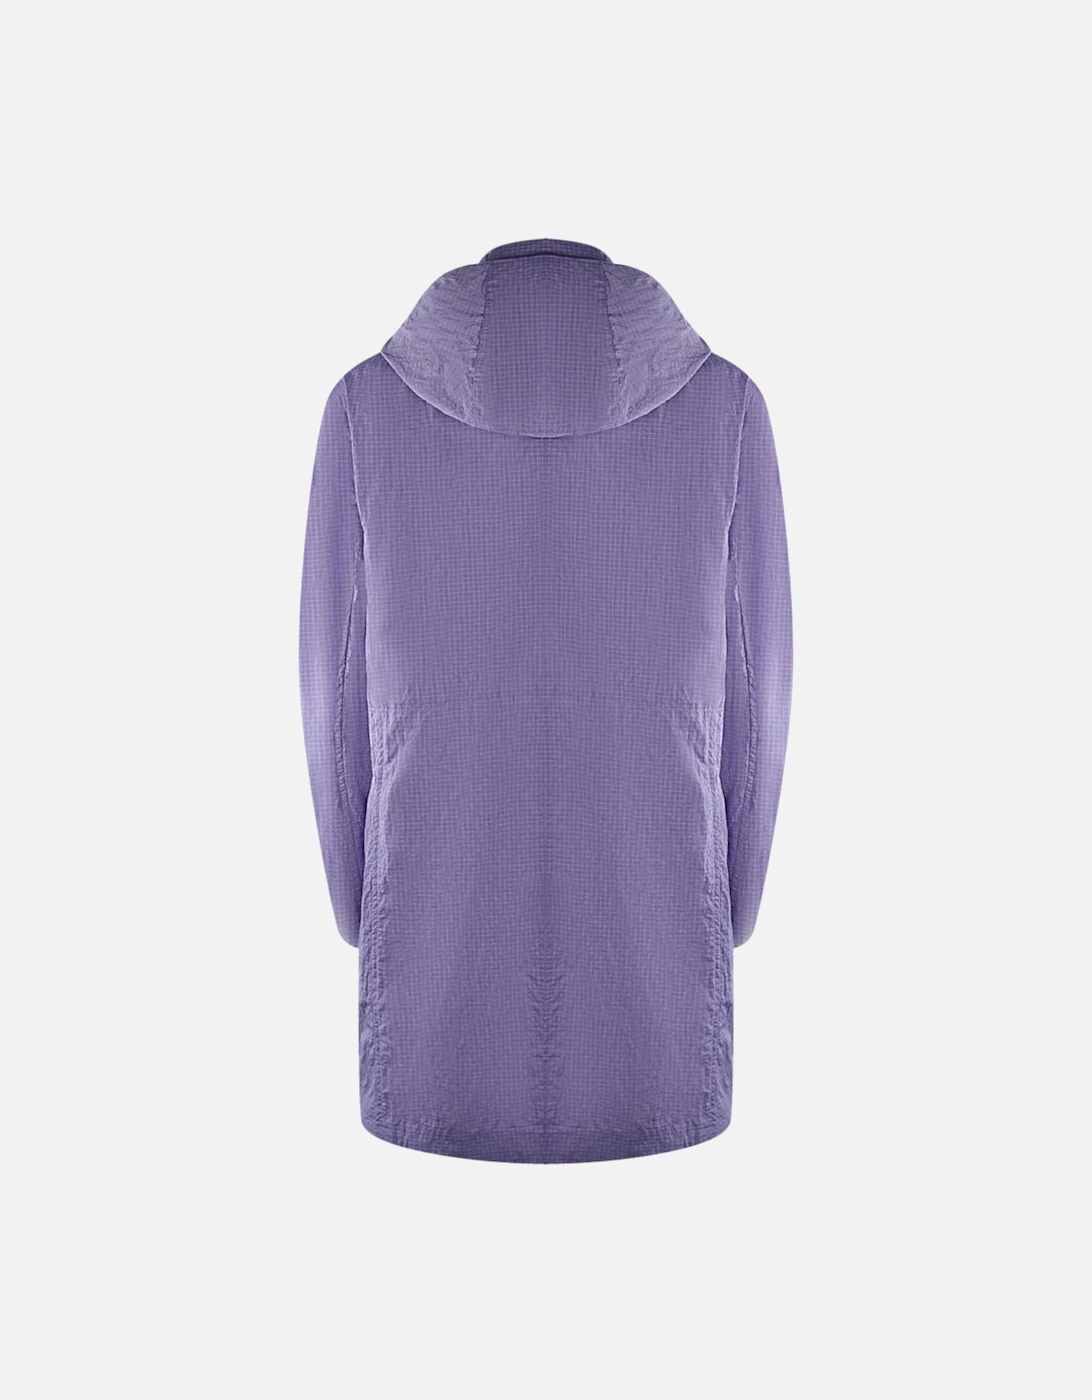 Suwa Amethyst Purple Jacket